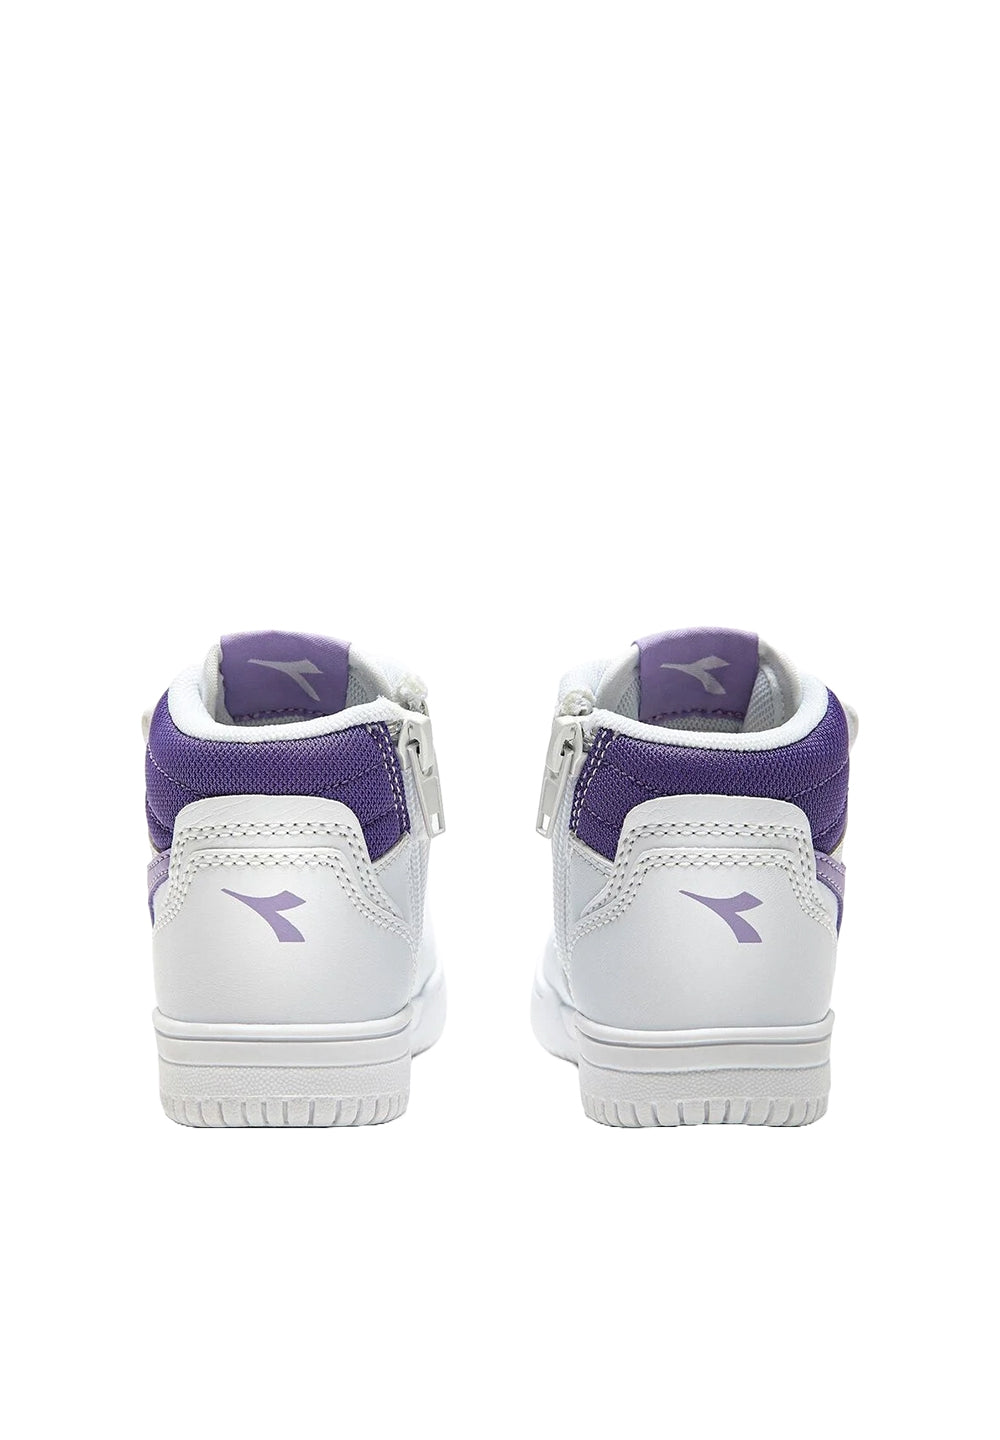 White-purple shoes for newborn girls